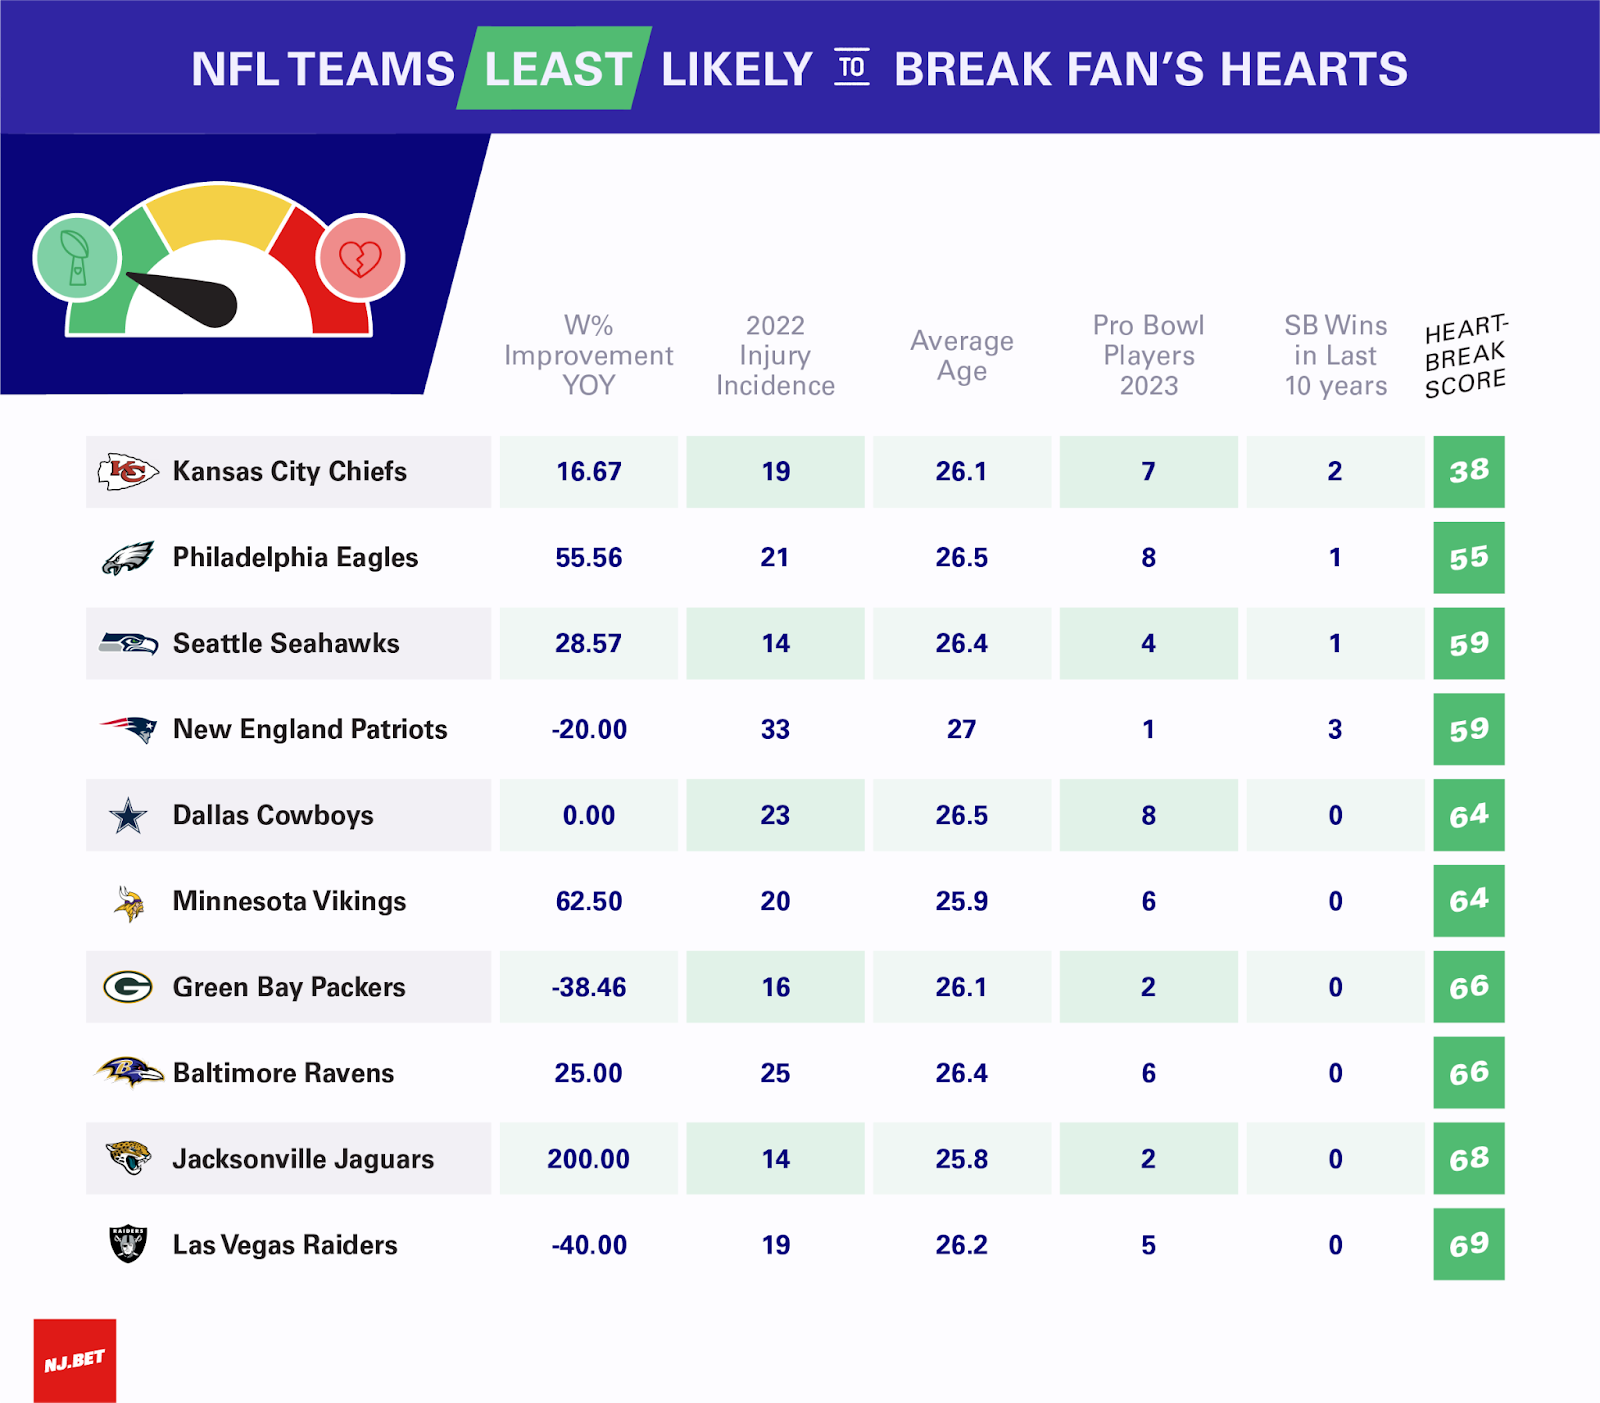 Teams least likely to break fan hearts - Statistical analysis from NJ.bet